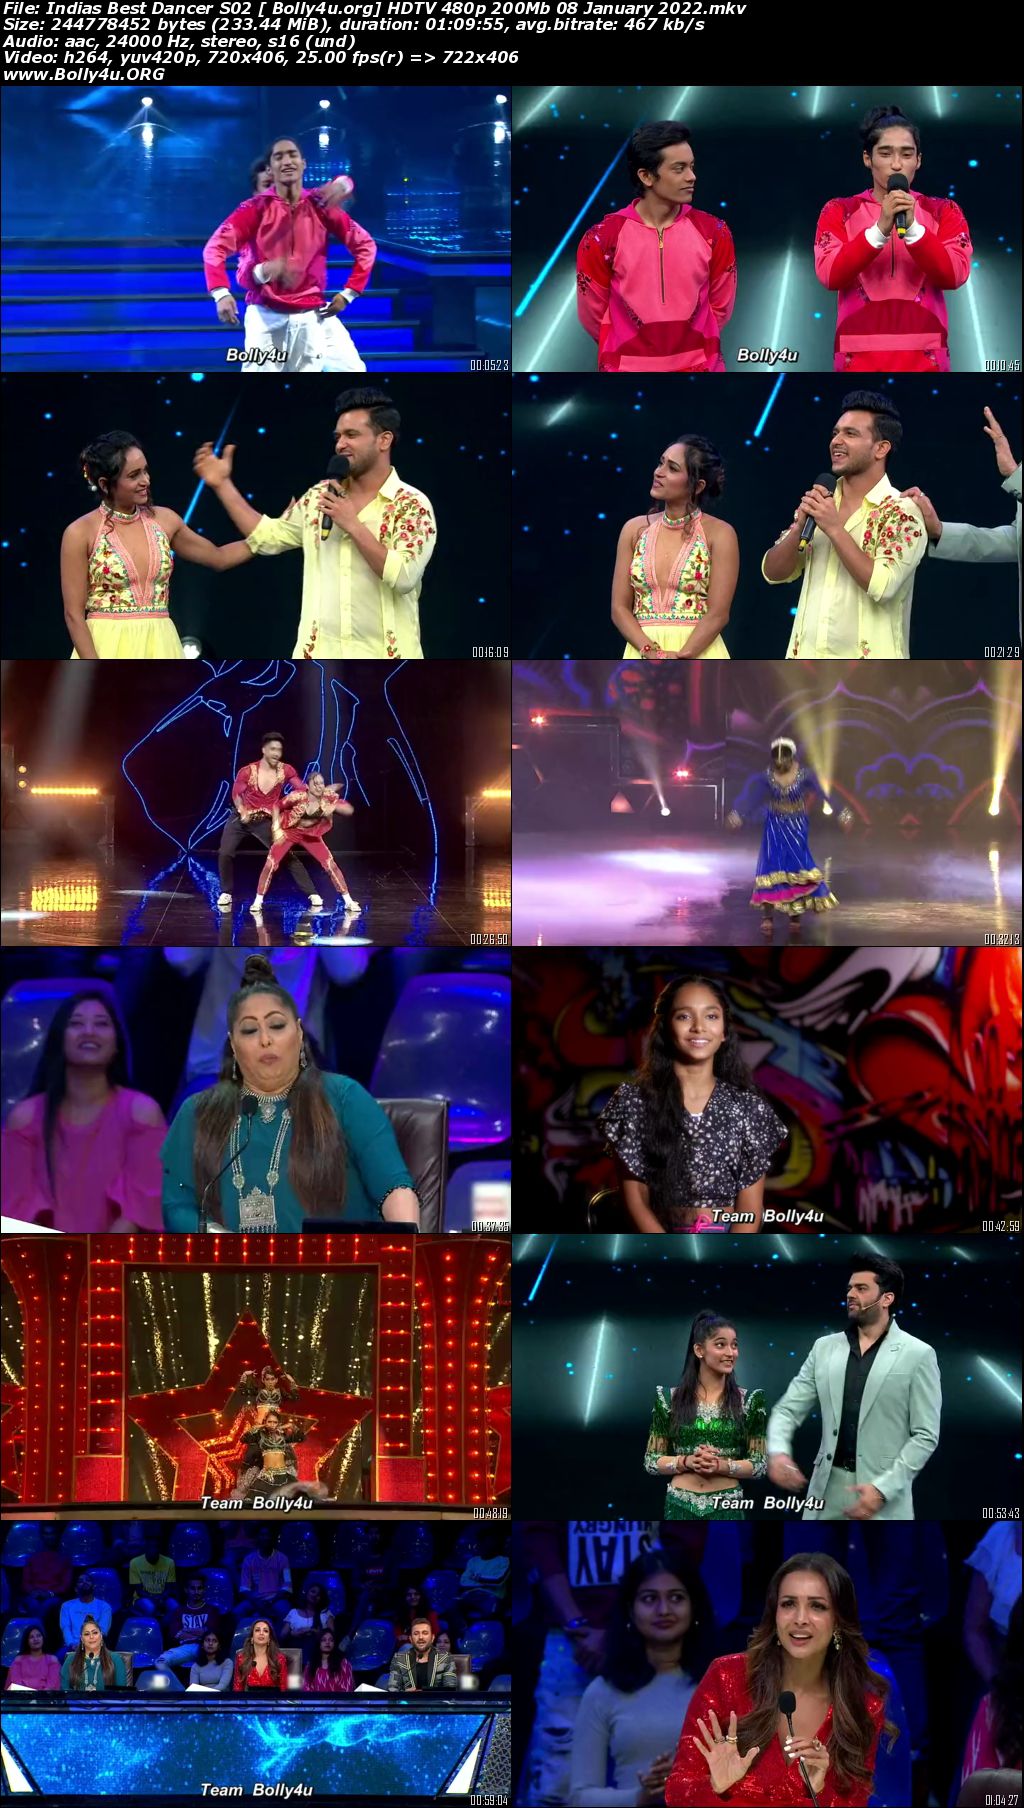 Indias Best Dancer S02 HDTV 480p 200Mb 08 January 2022 Download